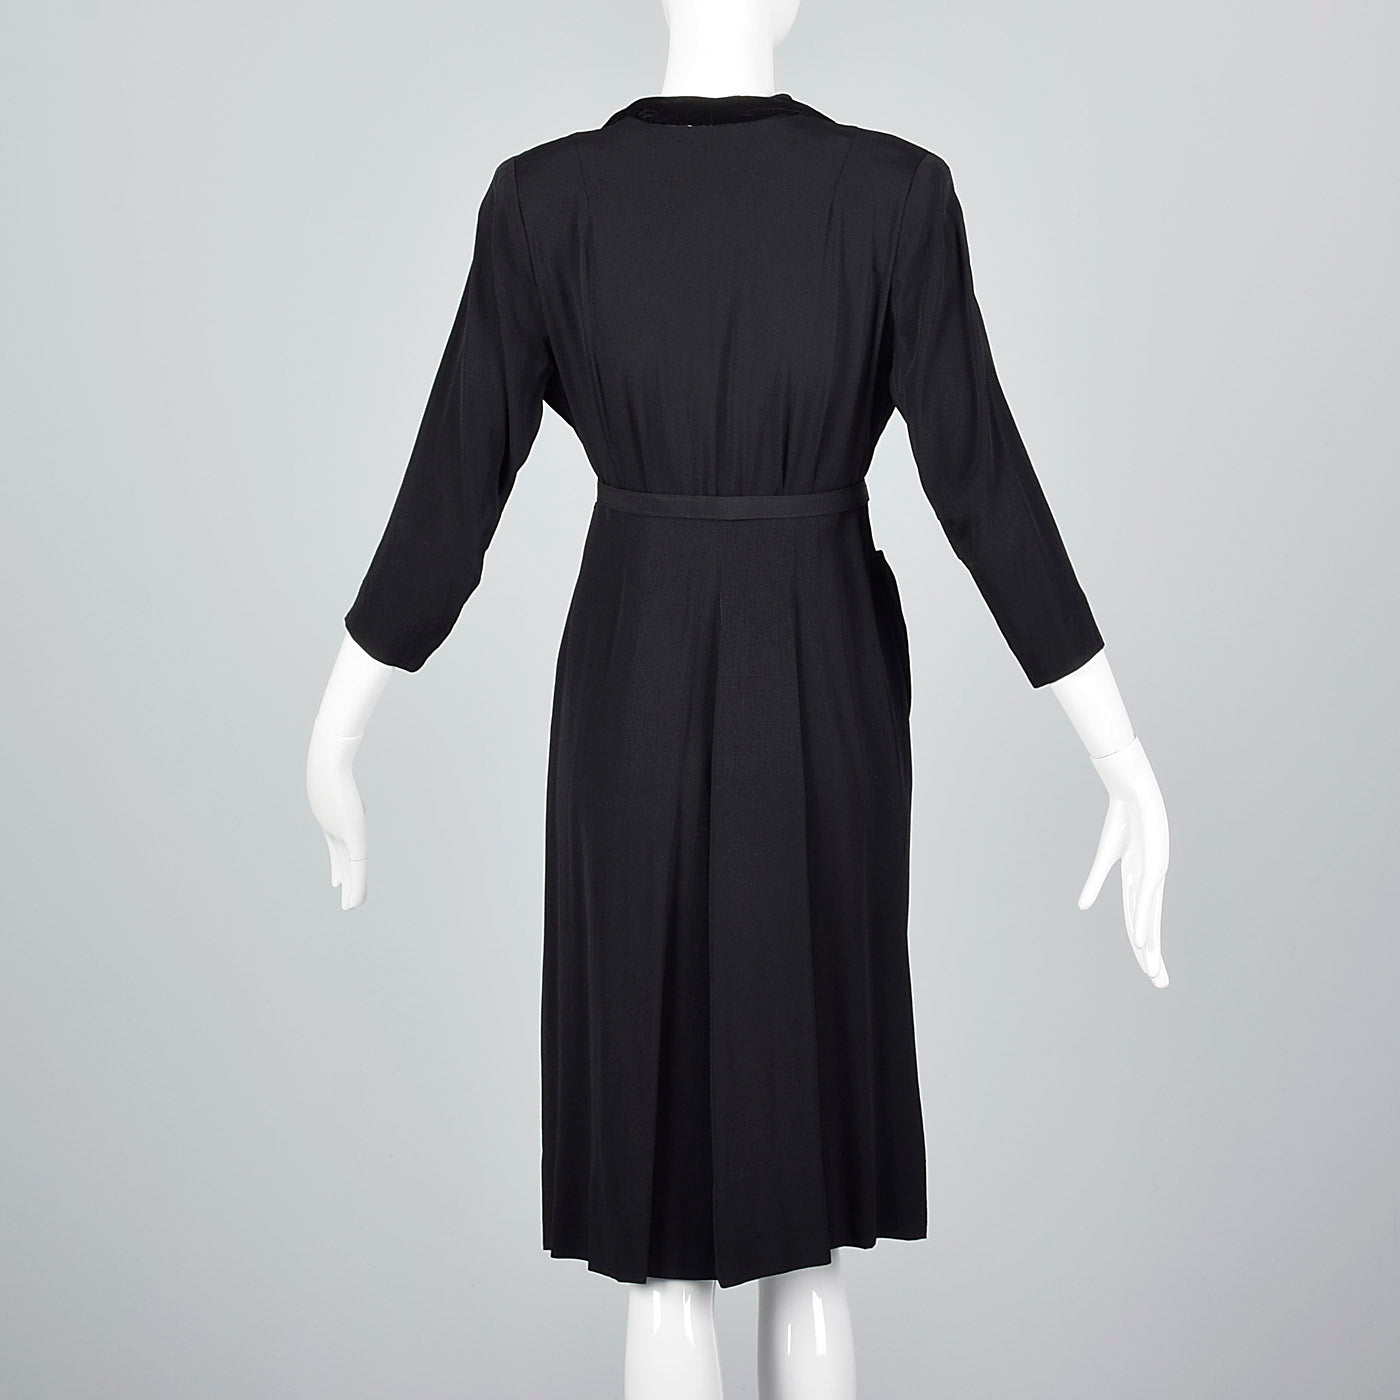 1950s Black Dress with Velvet Collar and Pockets